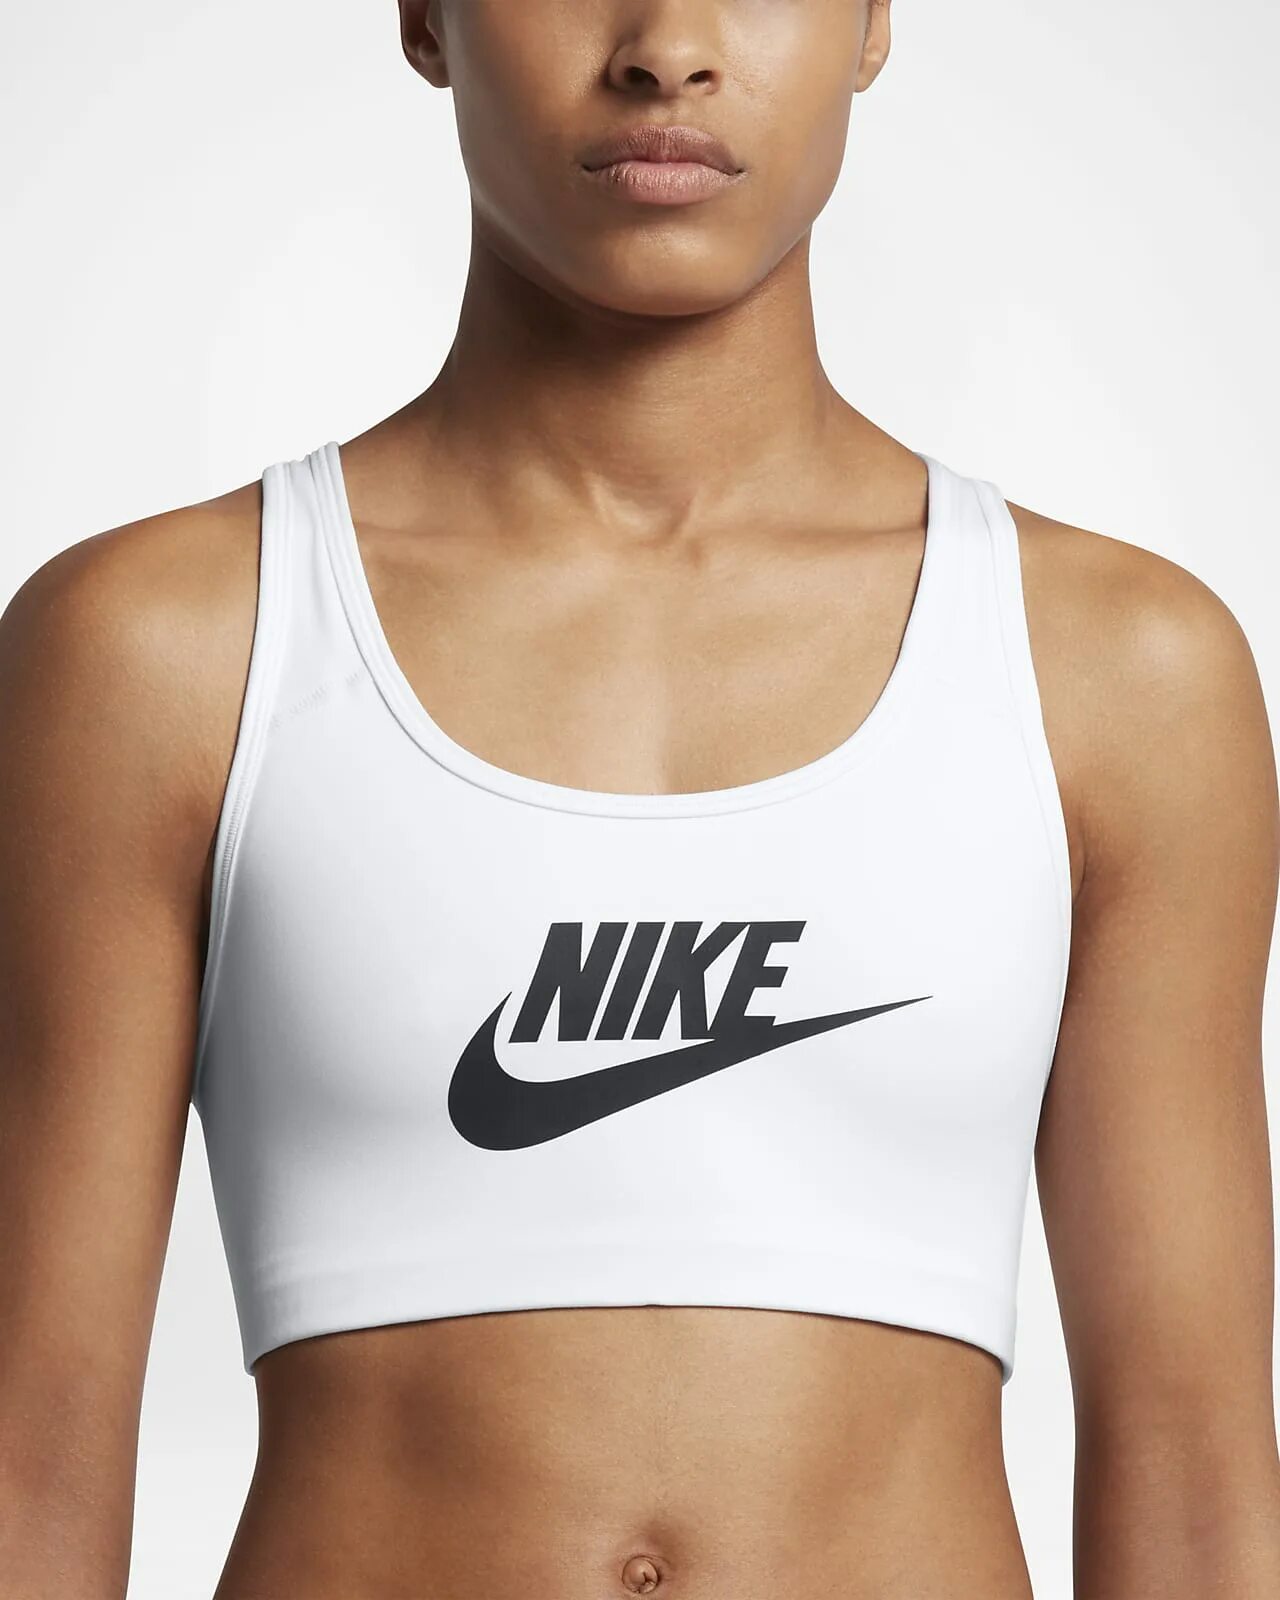 Топик найк. Спортивный топ бра Nike. Nike Swoosh Futura Bra. Топ Nike Swoosh. Топ бра Nike Pro Rival.